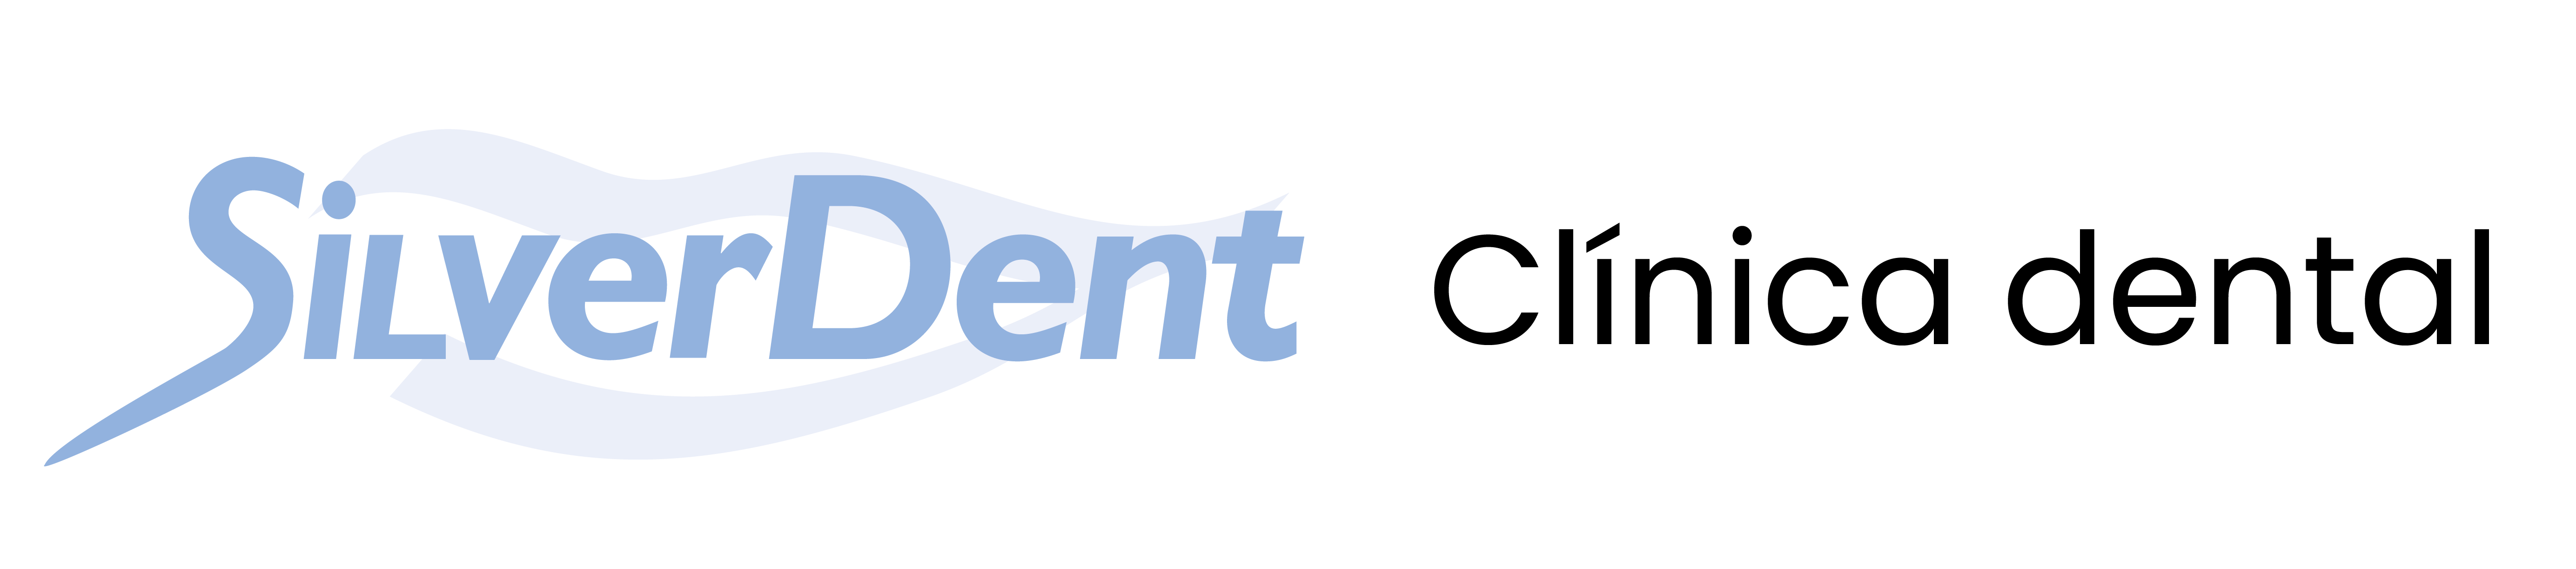 SILVERDENT logo